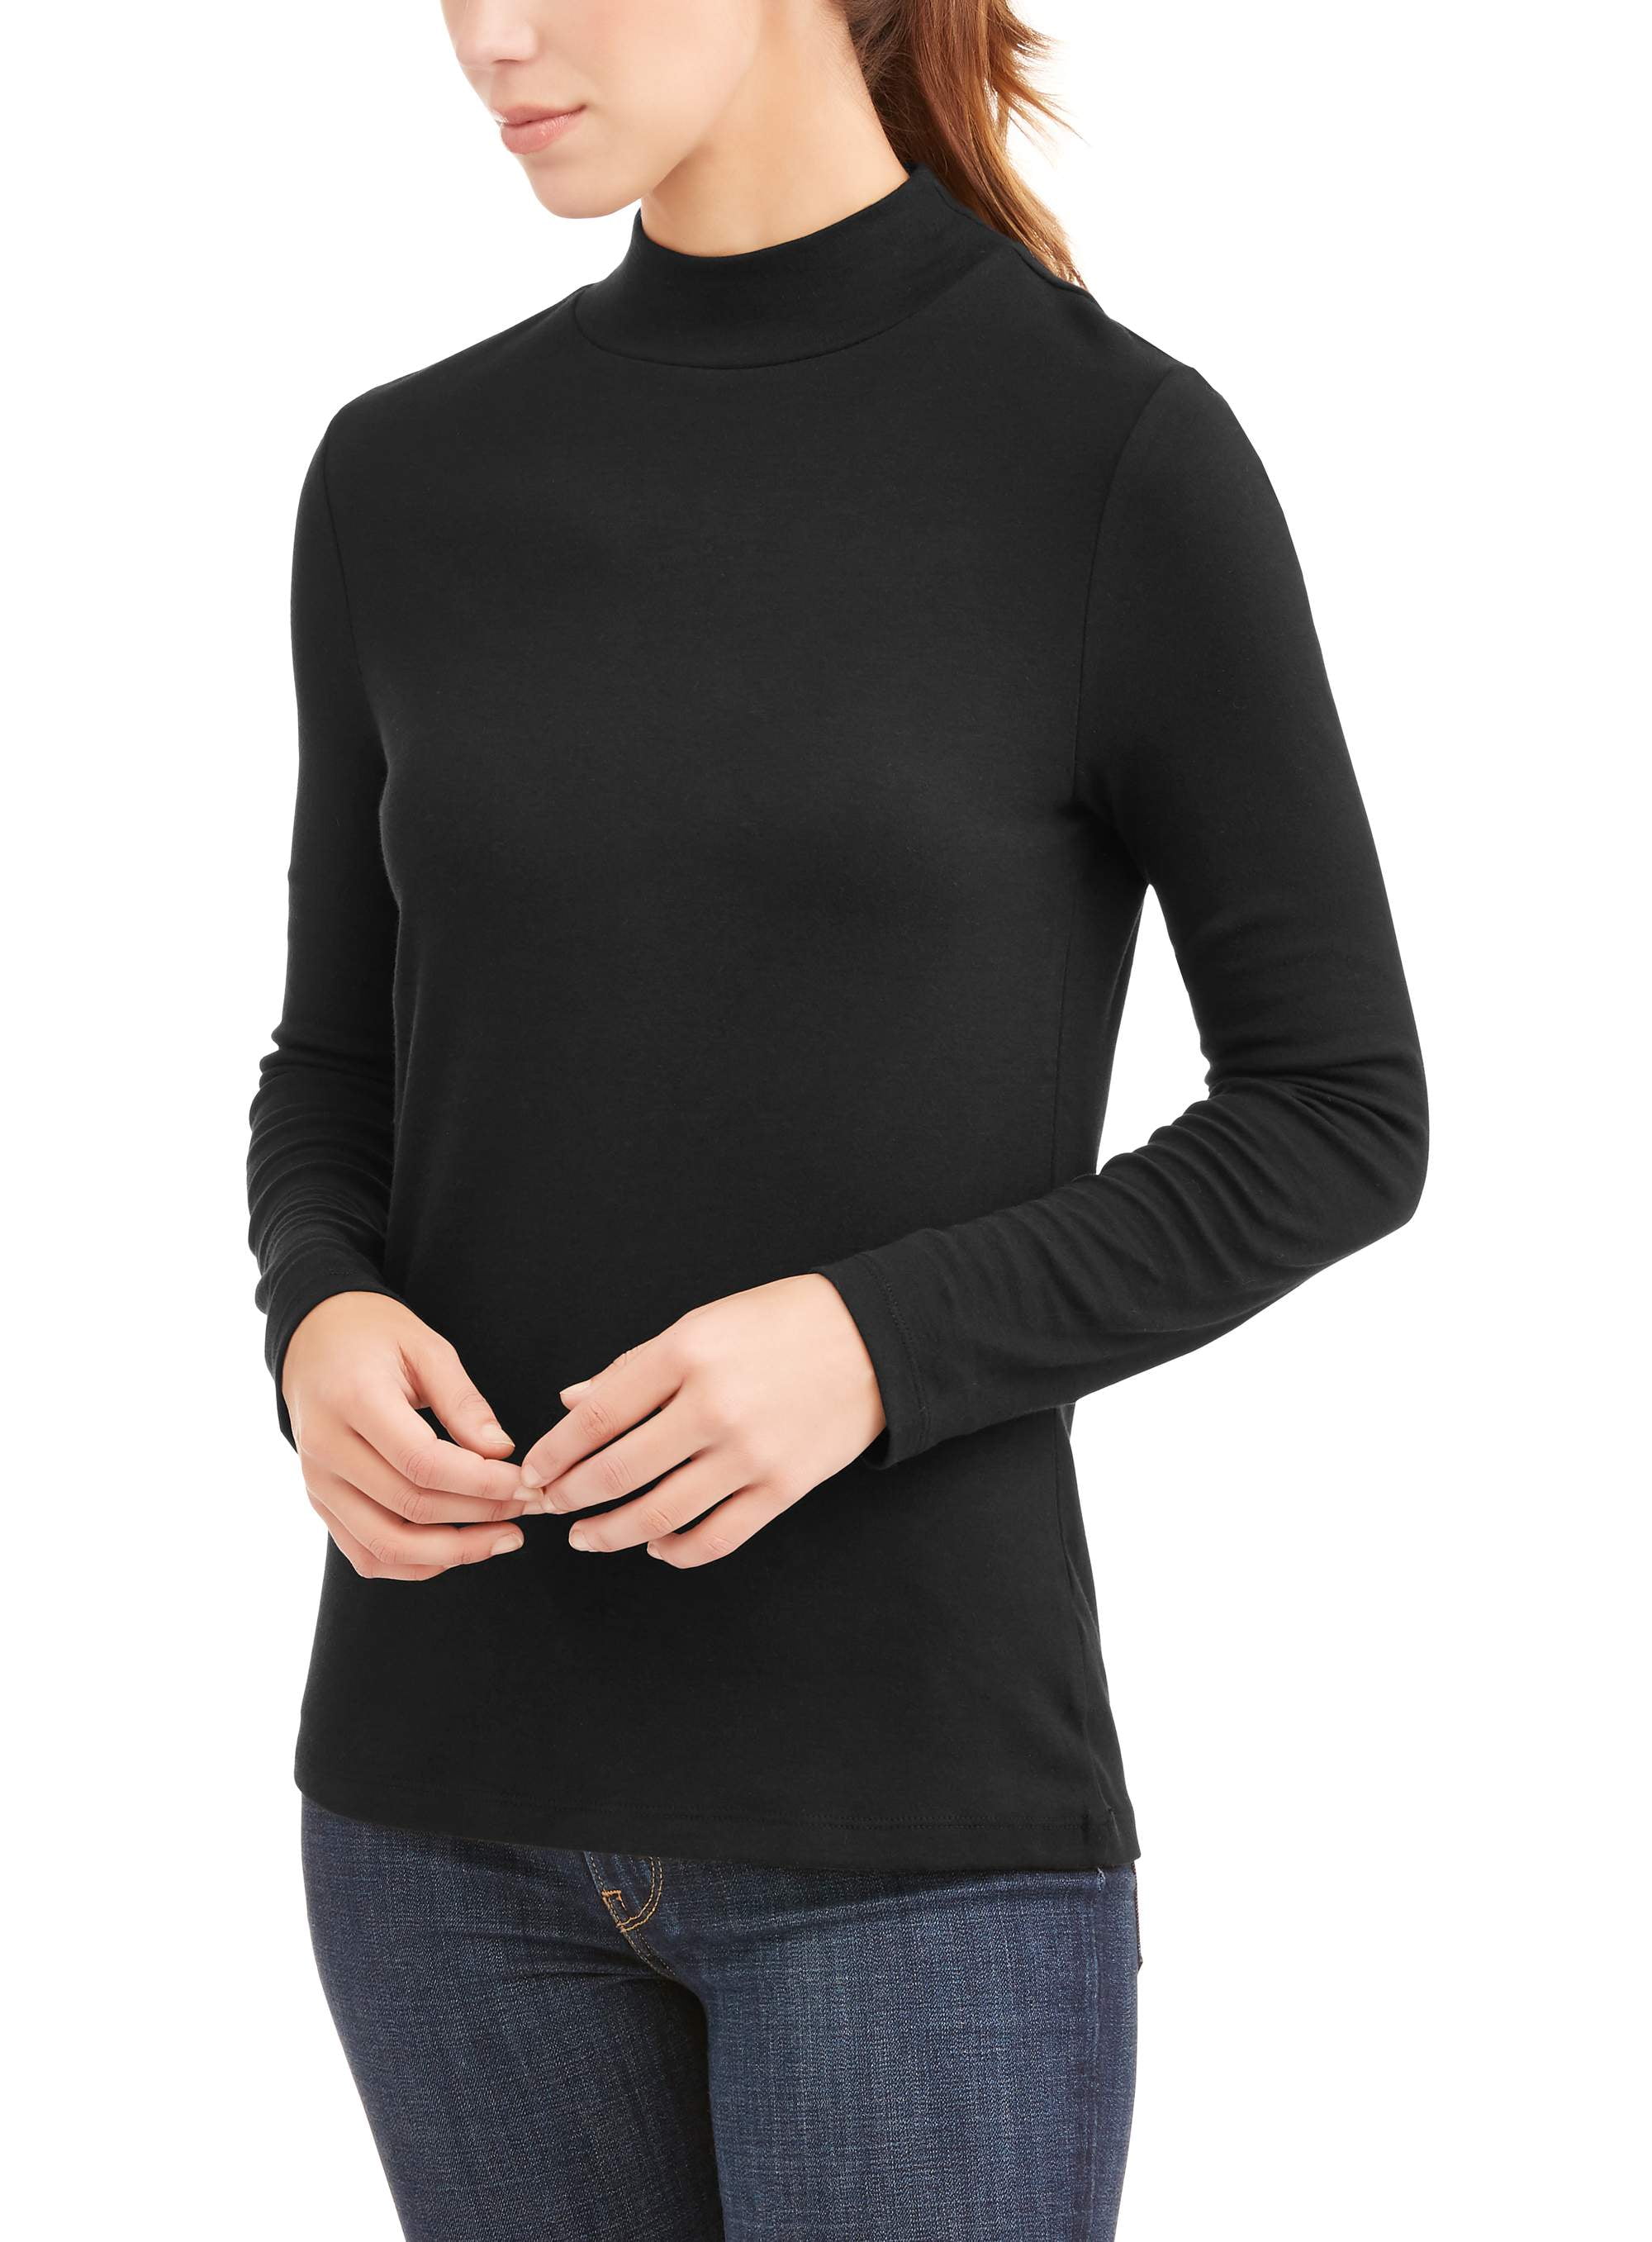 White Stag - Women's Long Sleeve Mock Neck T-Shirt - Walmart.com ...